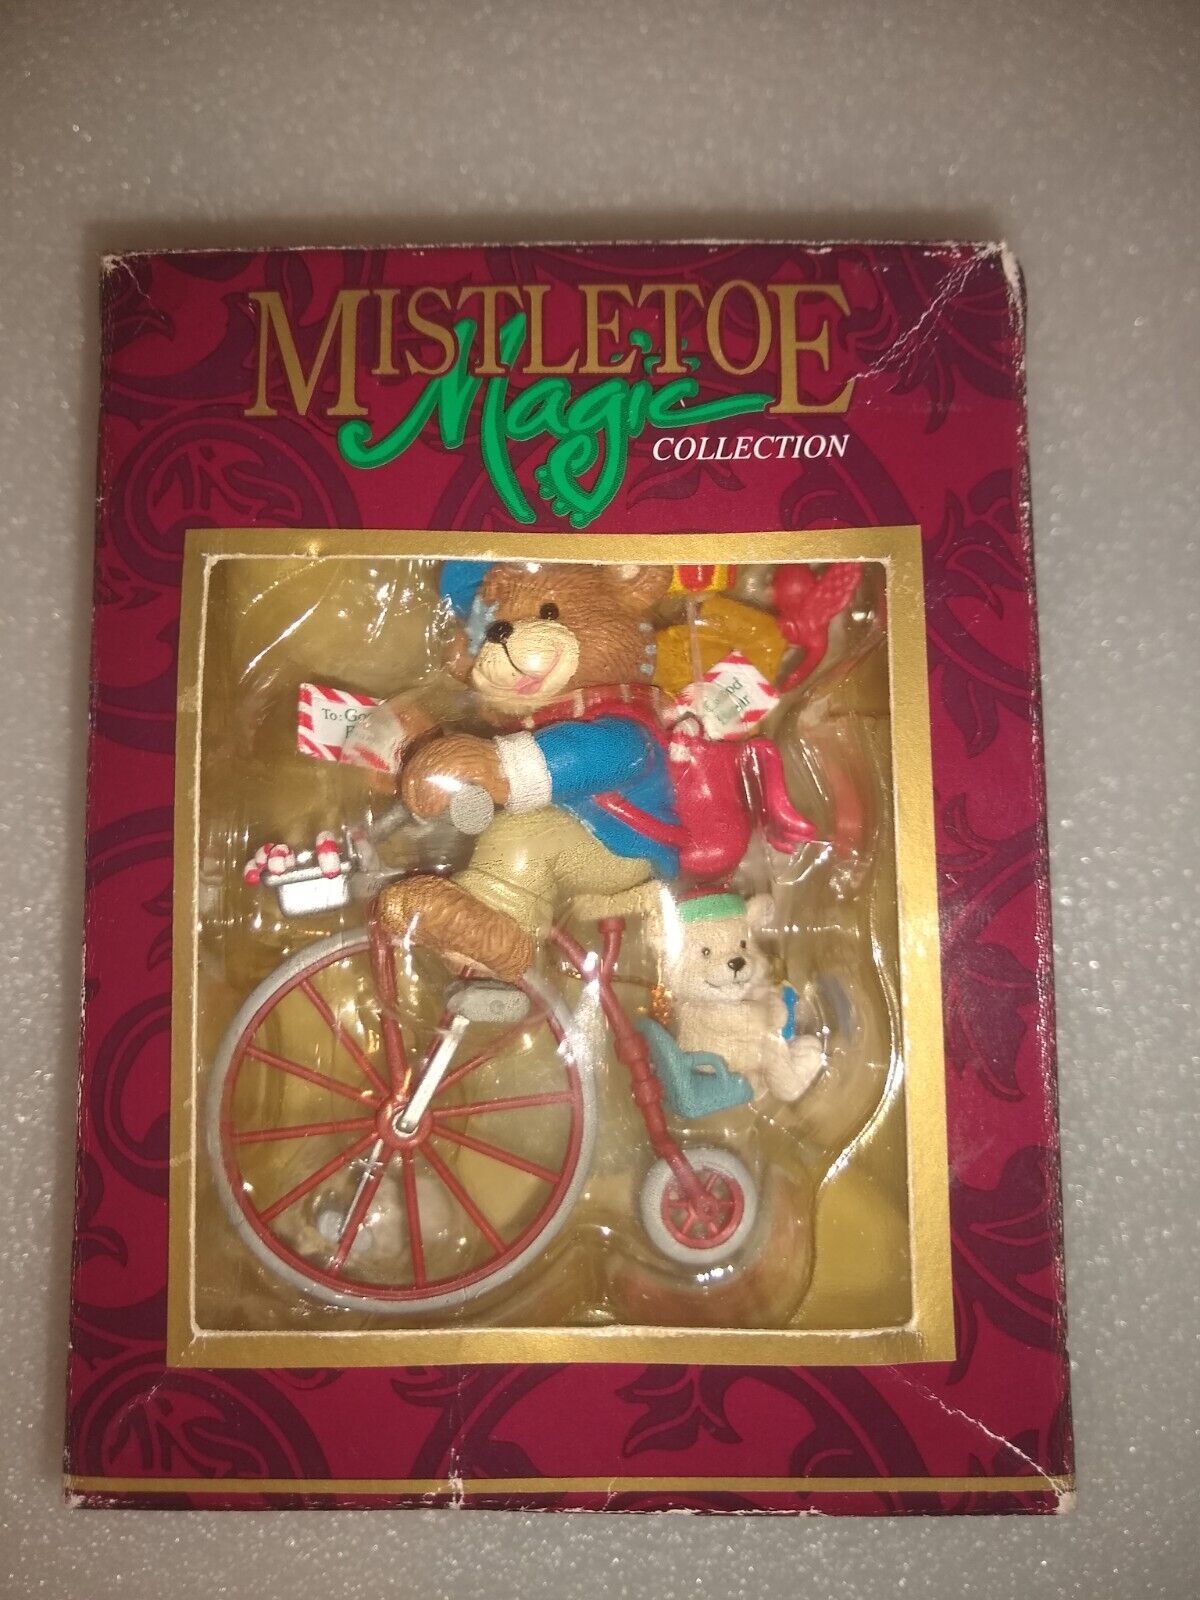 vintage Red Box mistletoe magic collection ornament bear riding bike